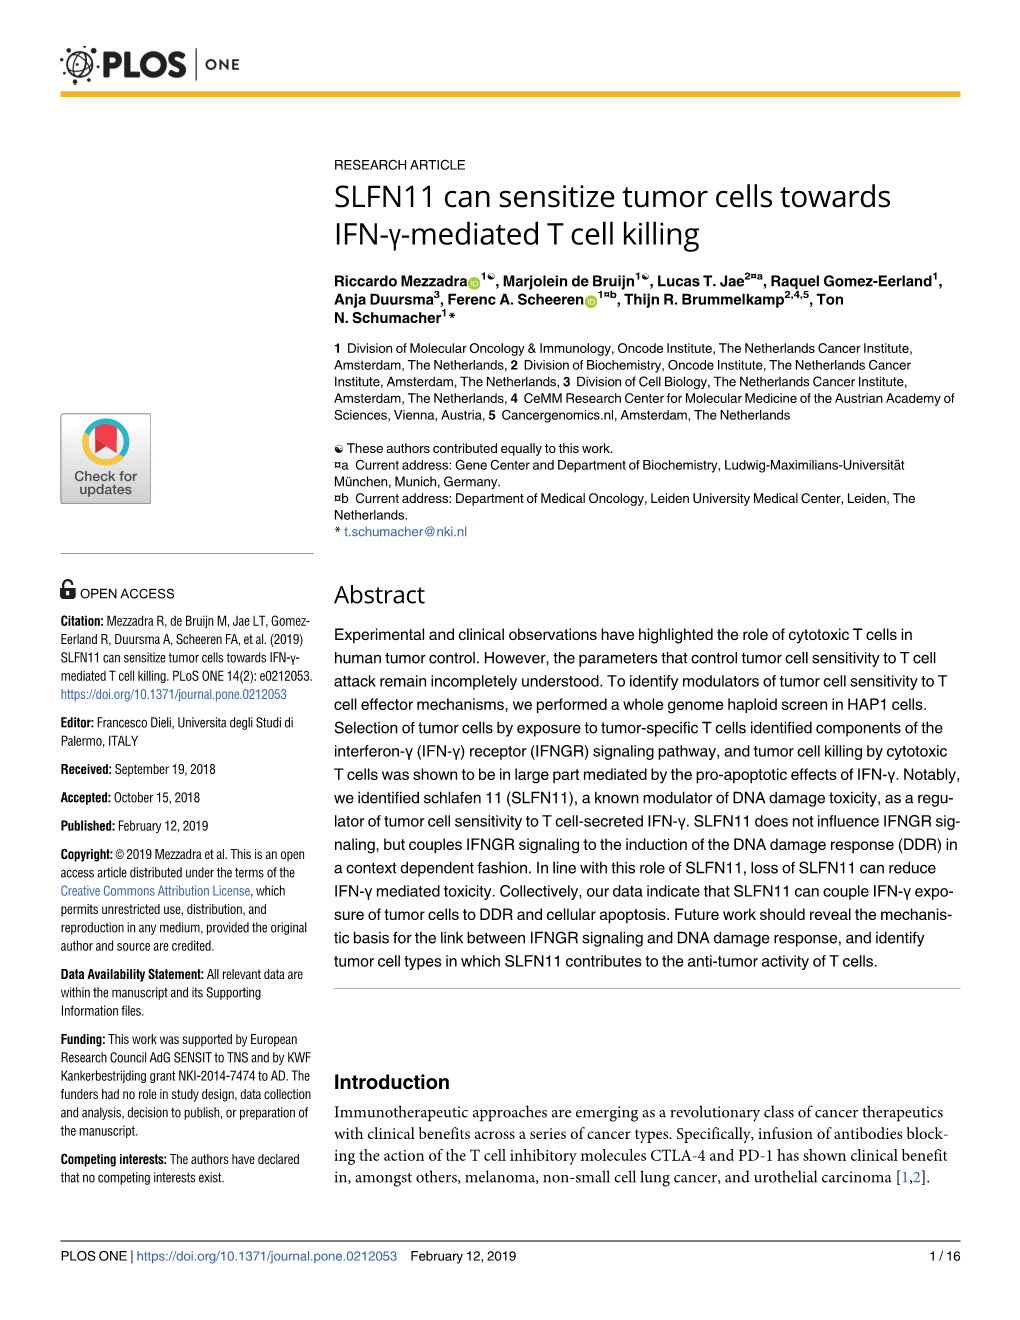 SLFN11 Can Sensitize Tumor Cells Towards IFN-Γ-Mediated T Cell Killing